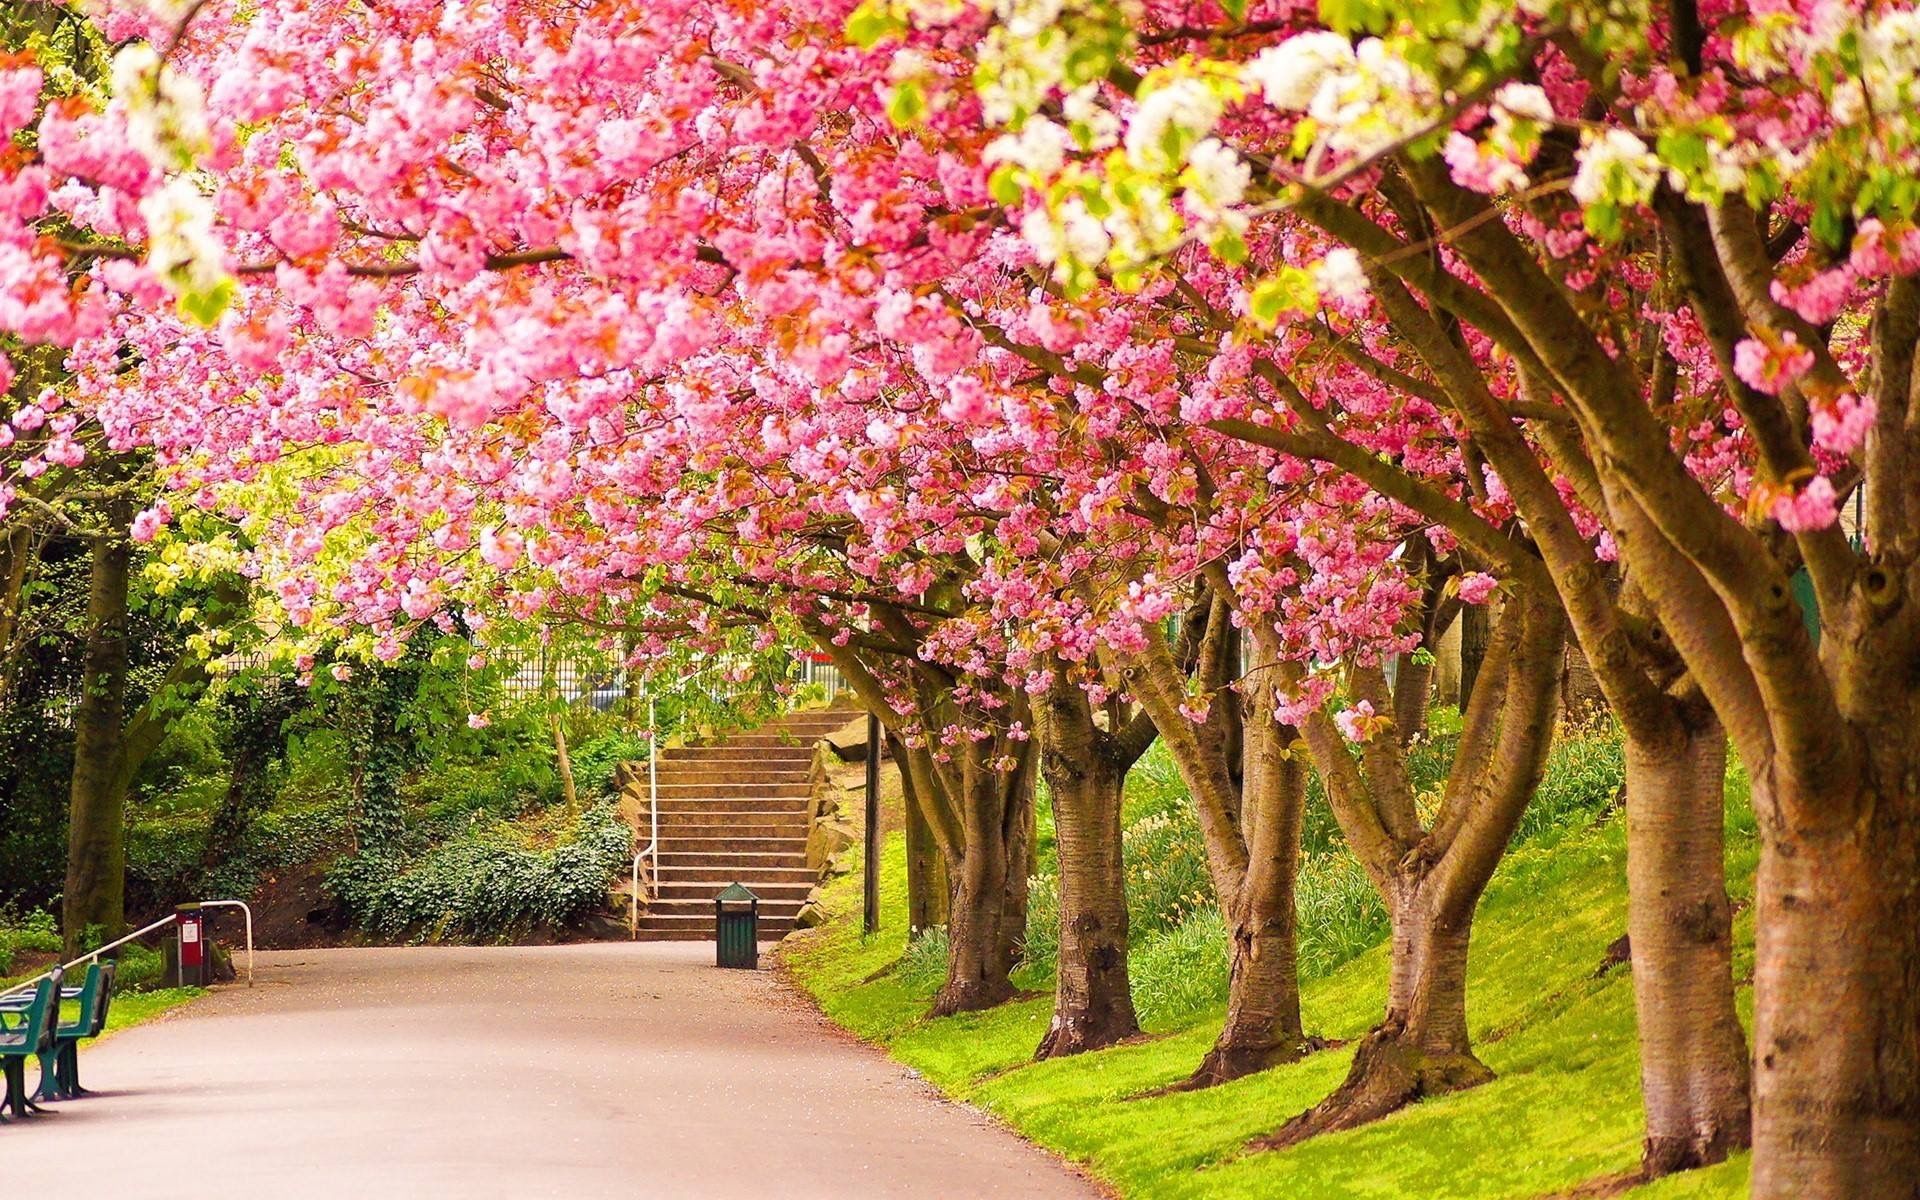 Elegant Pretty Spring Picture for Desktop. Spring wallpaper, Spring desktop wallpaper, Nature desktop wallpaper